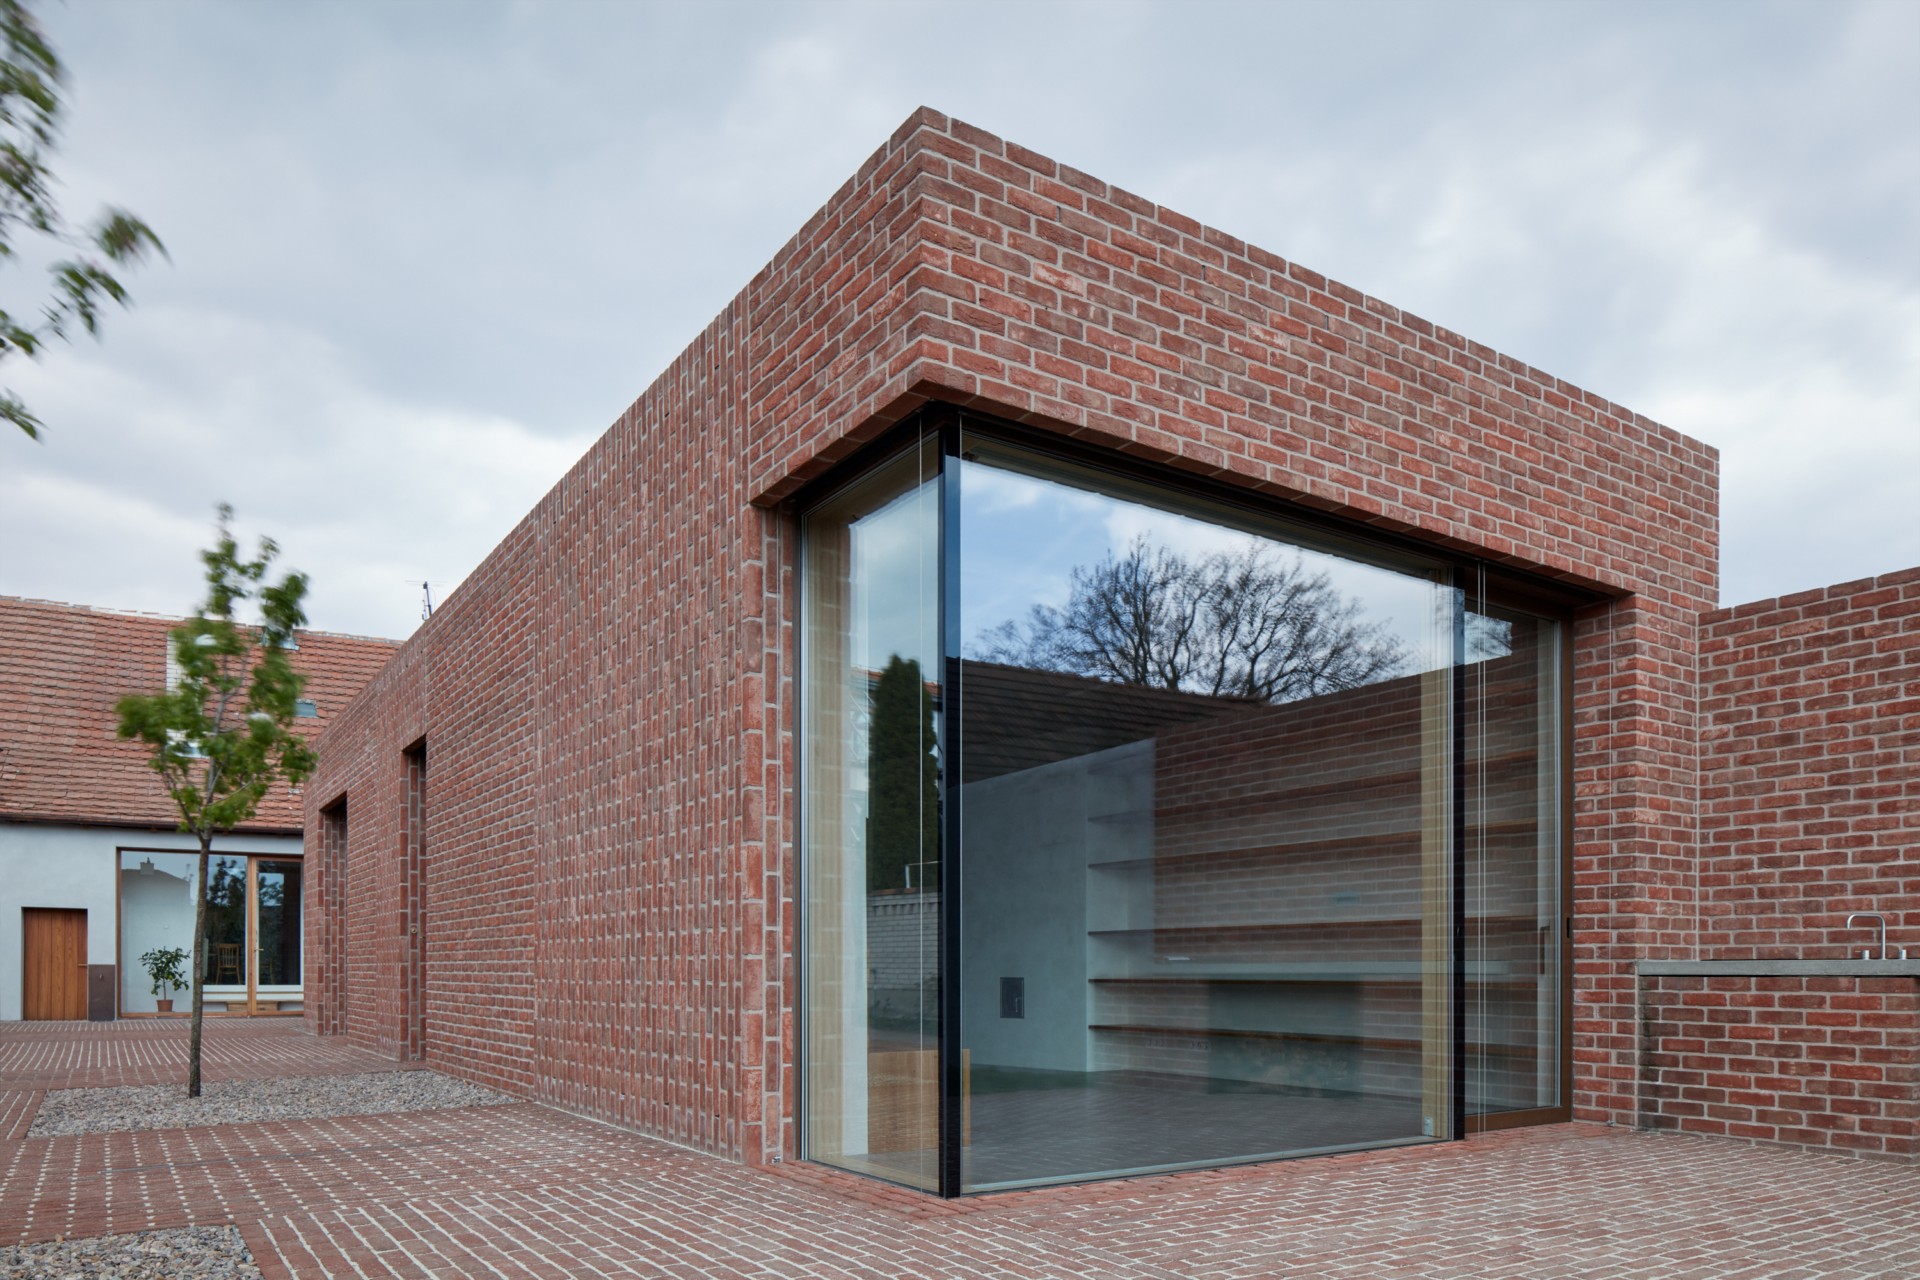 An elegy of brick: Brick Garden with Brick House by Jan Proska.